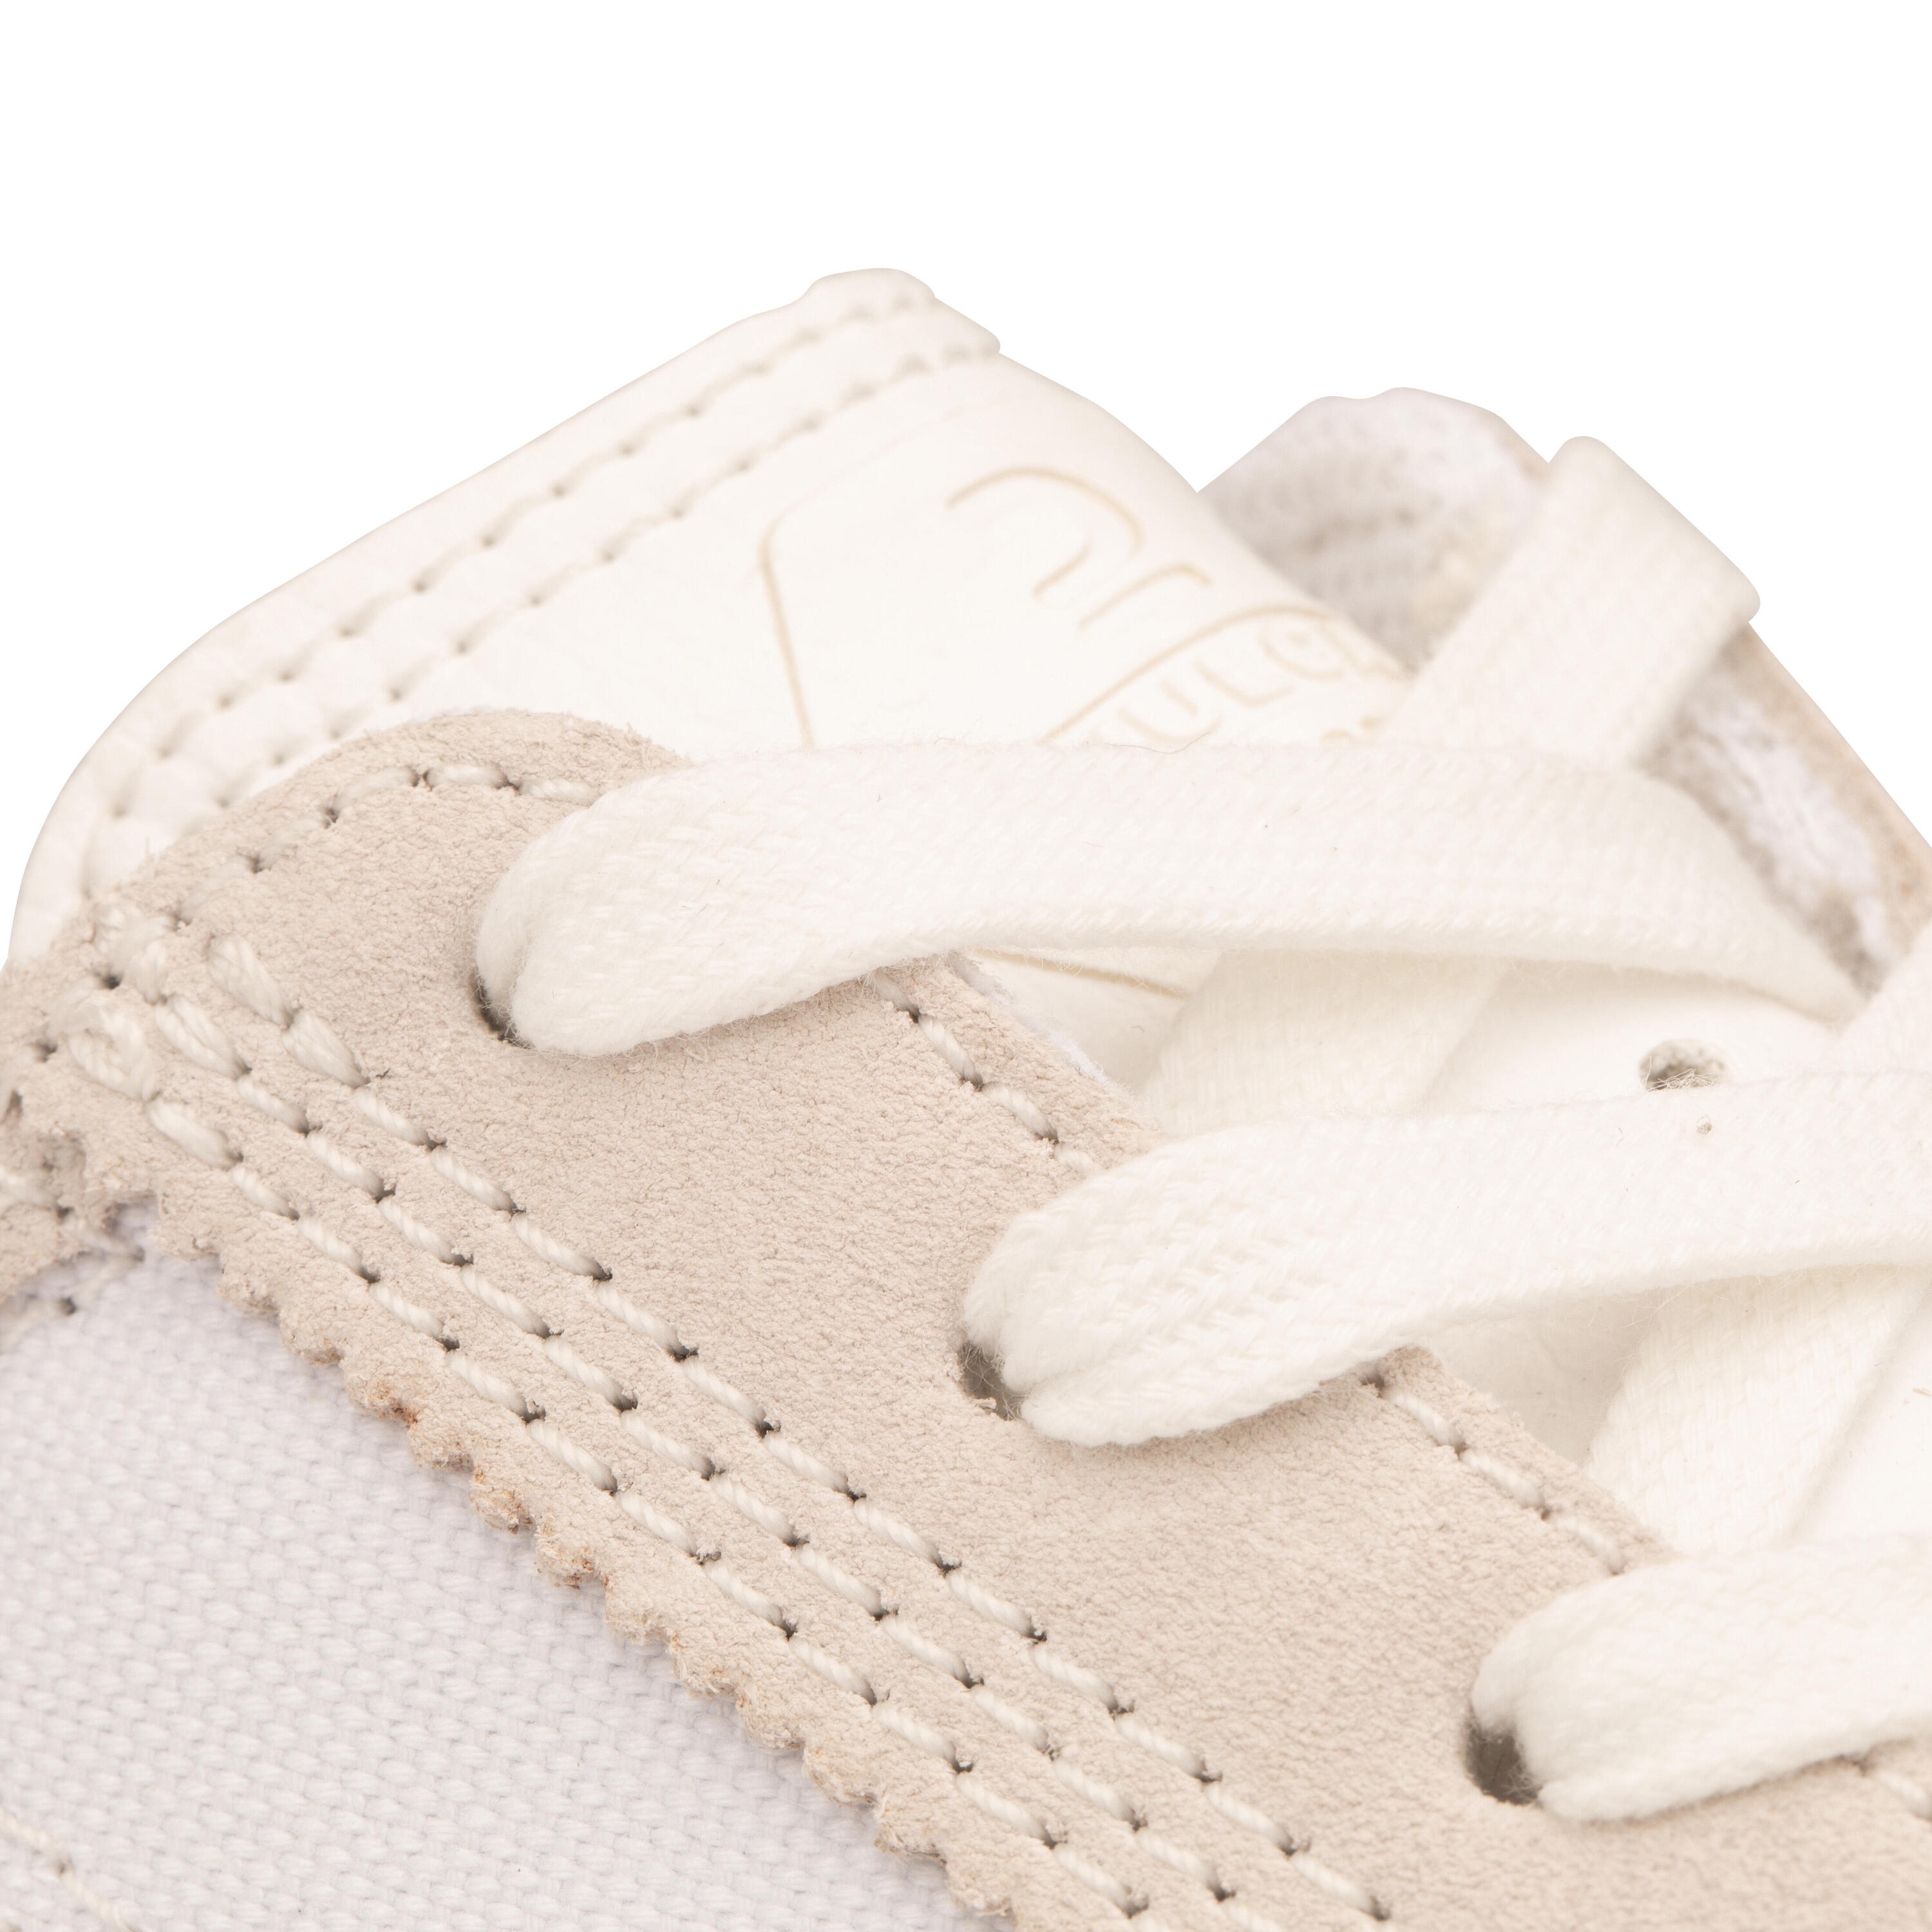 Adult Vulcanised Skate Shoes Vulca 500 II - White/White 13/18